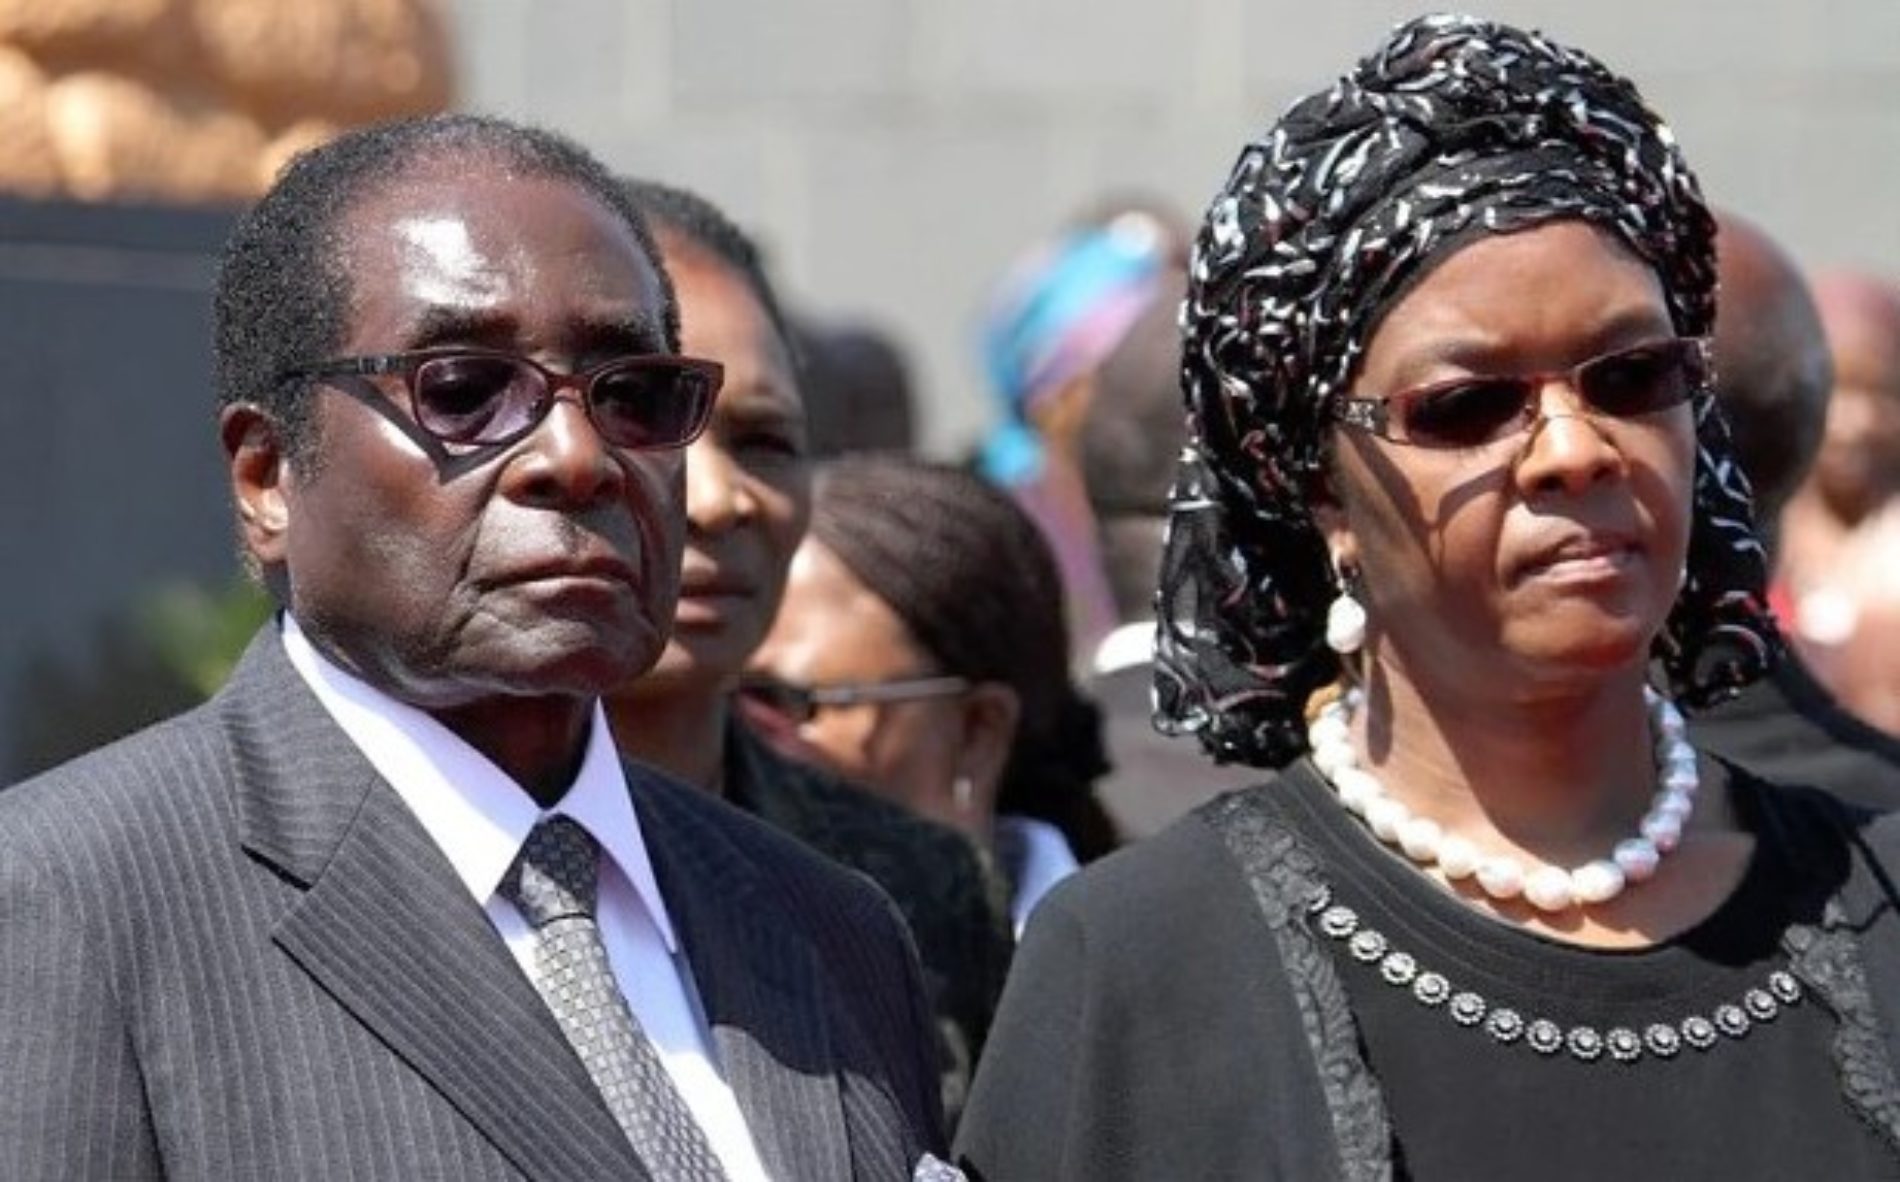 Robert Mugabe’s grip on Zimbabwe decline with military taking control